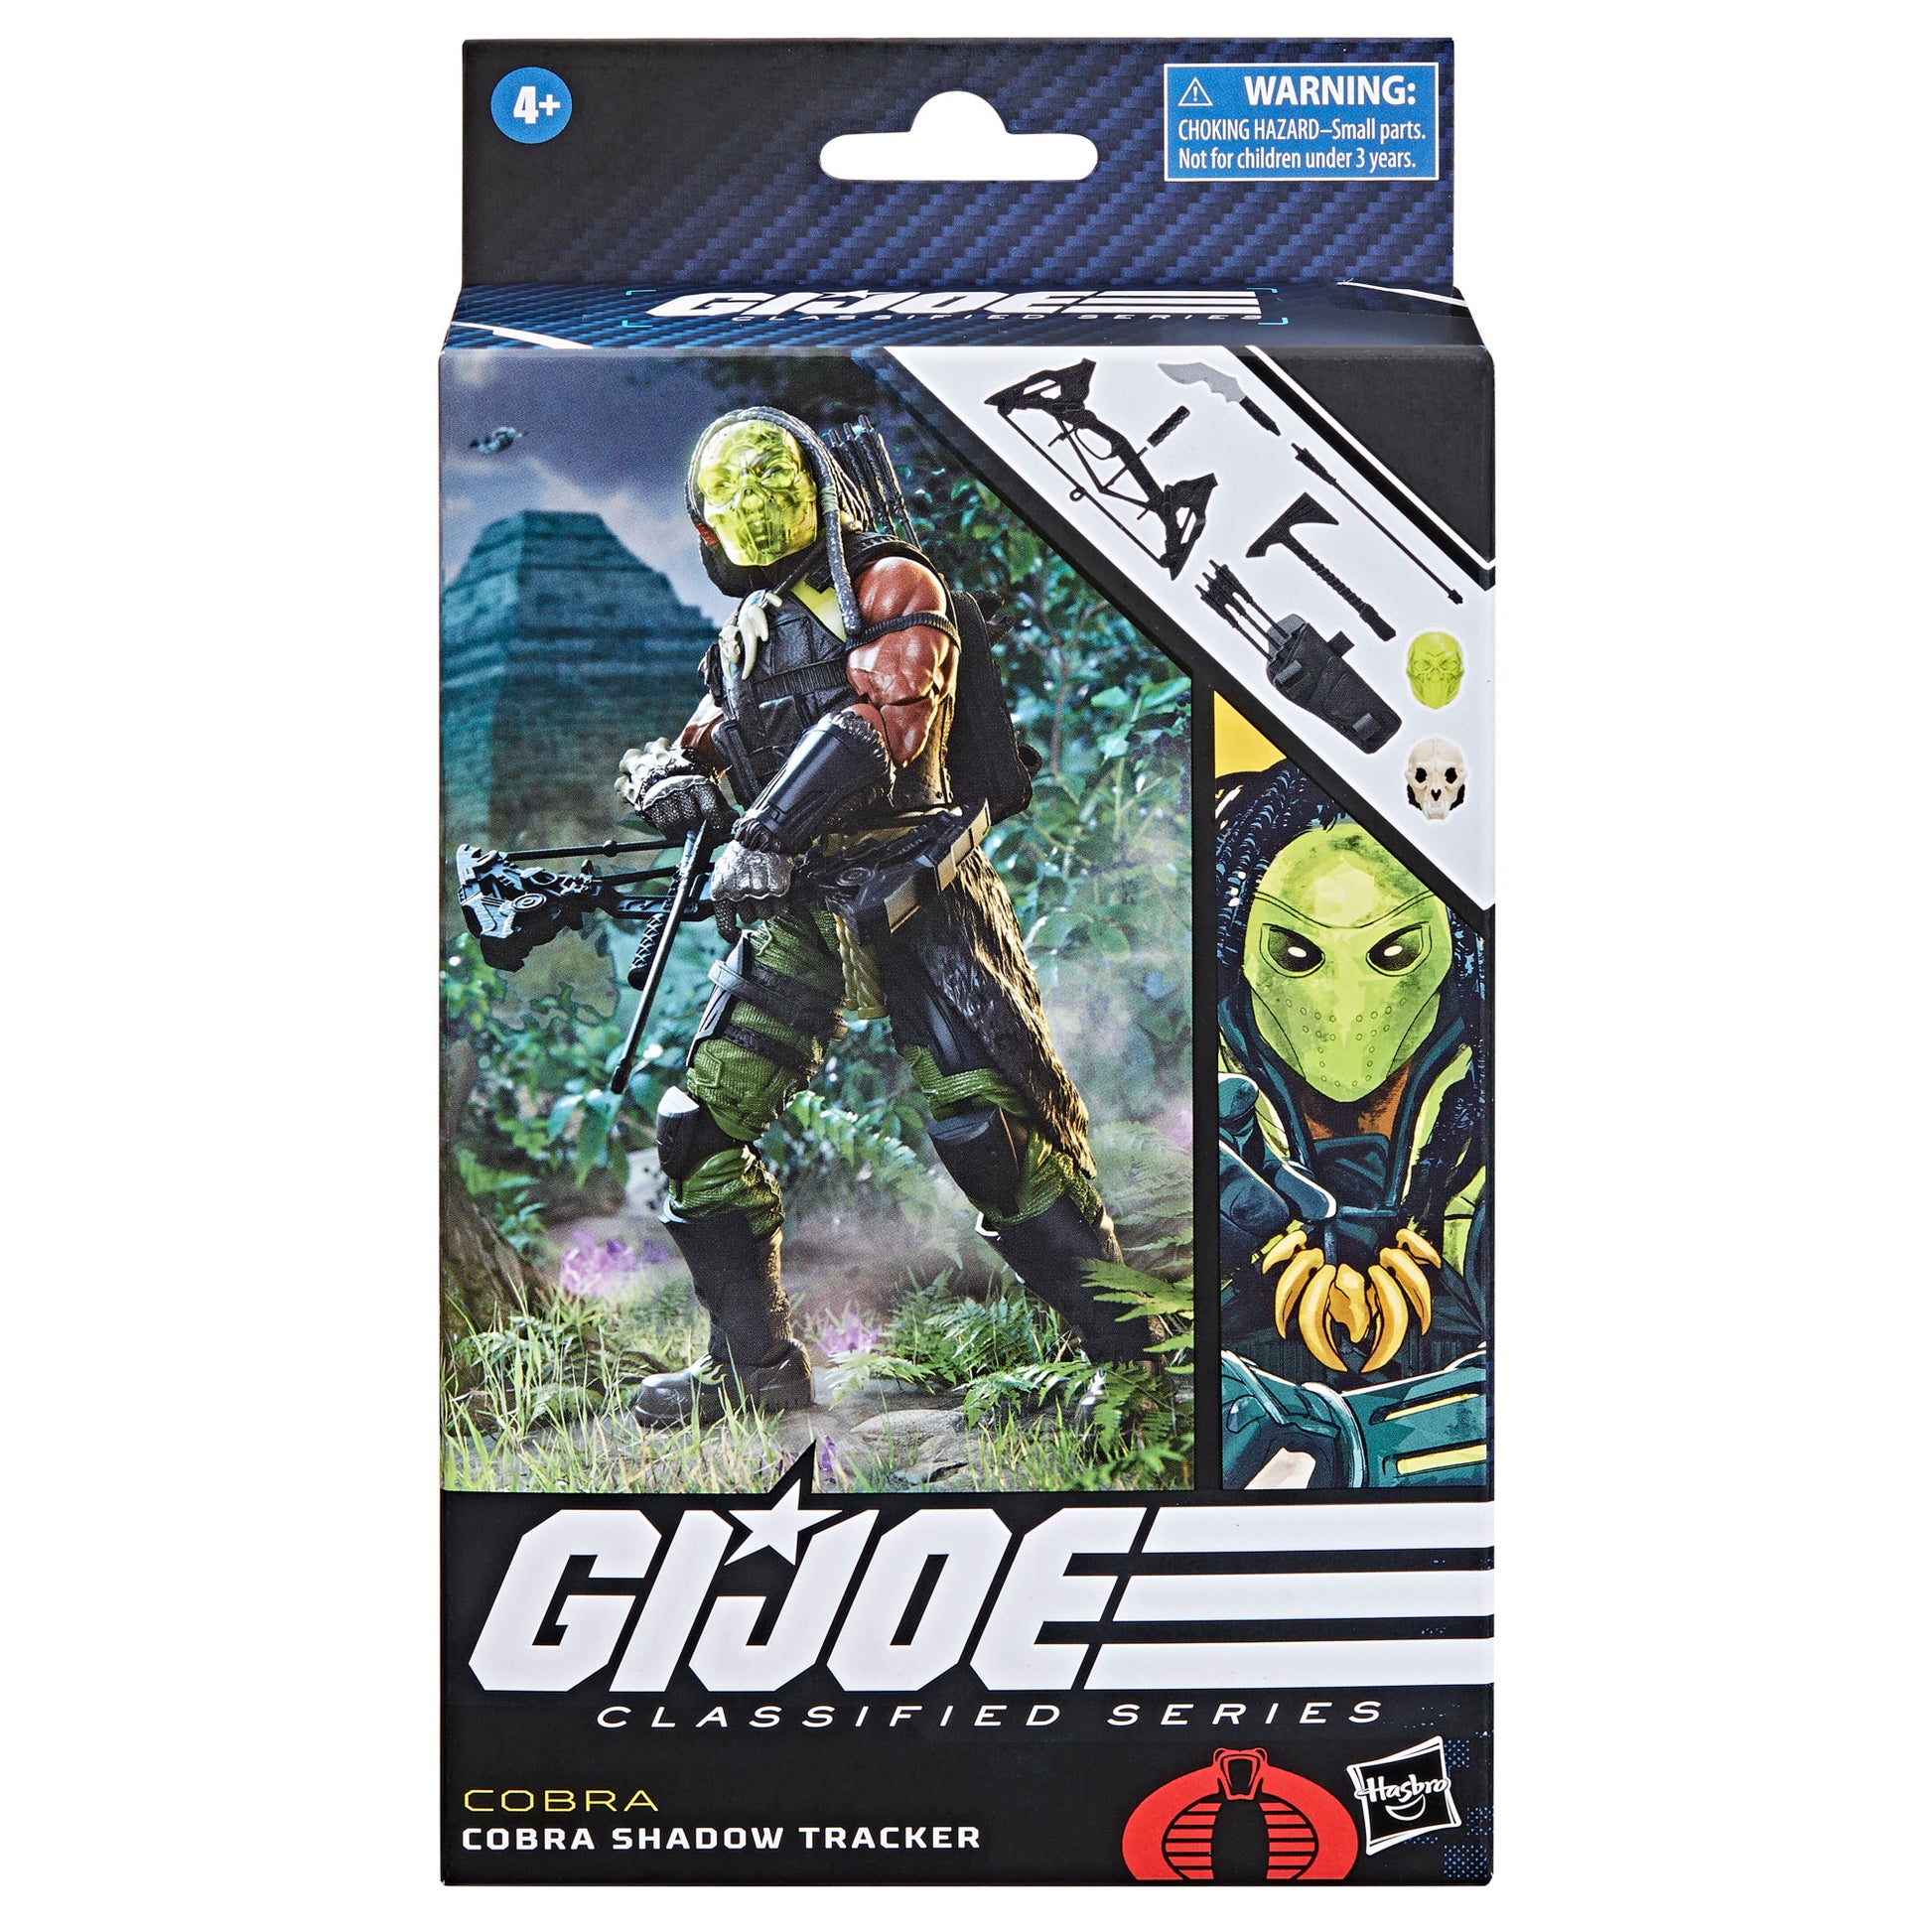 G.I. Joe Classified Series Cobra Shadow Tracker, 108